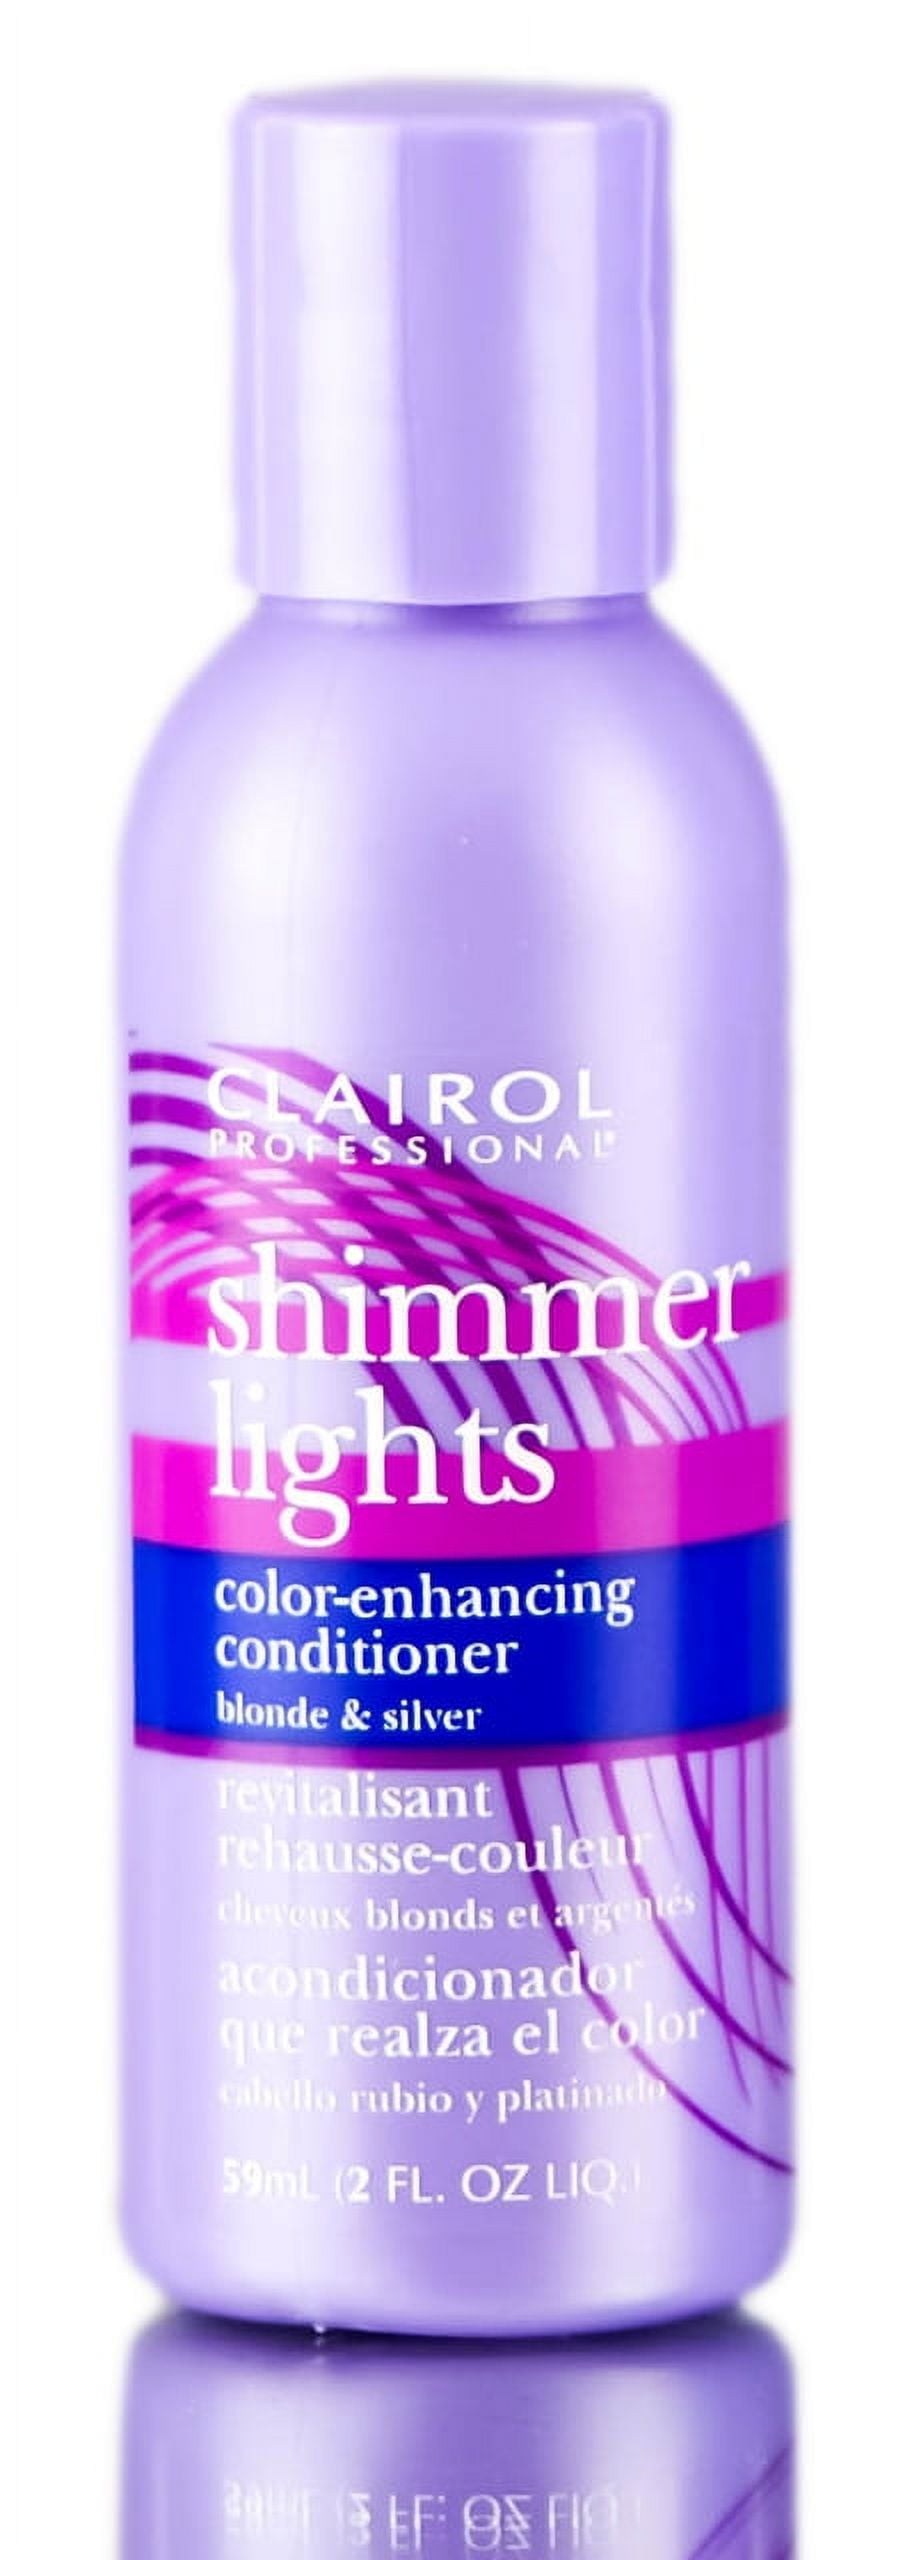 Clairol Shimmer Lights Conditioner